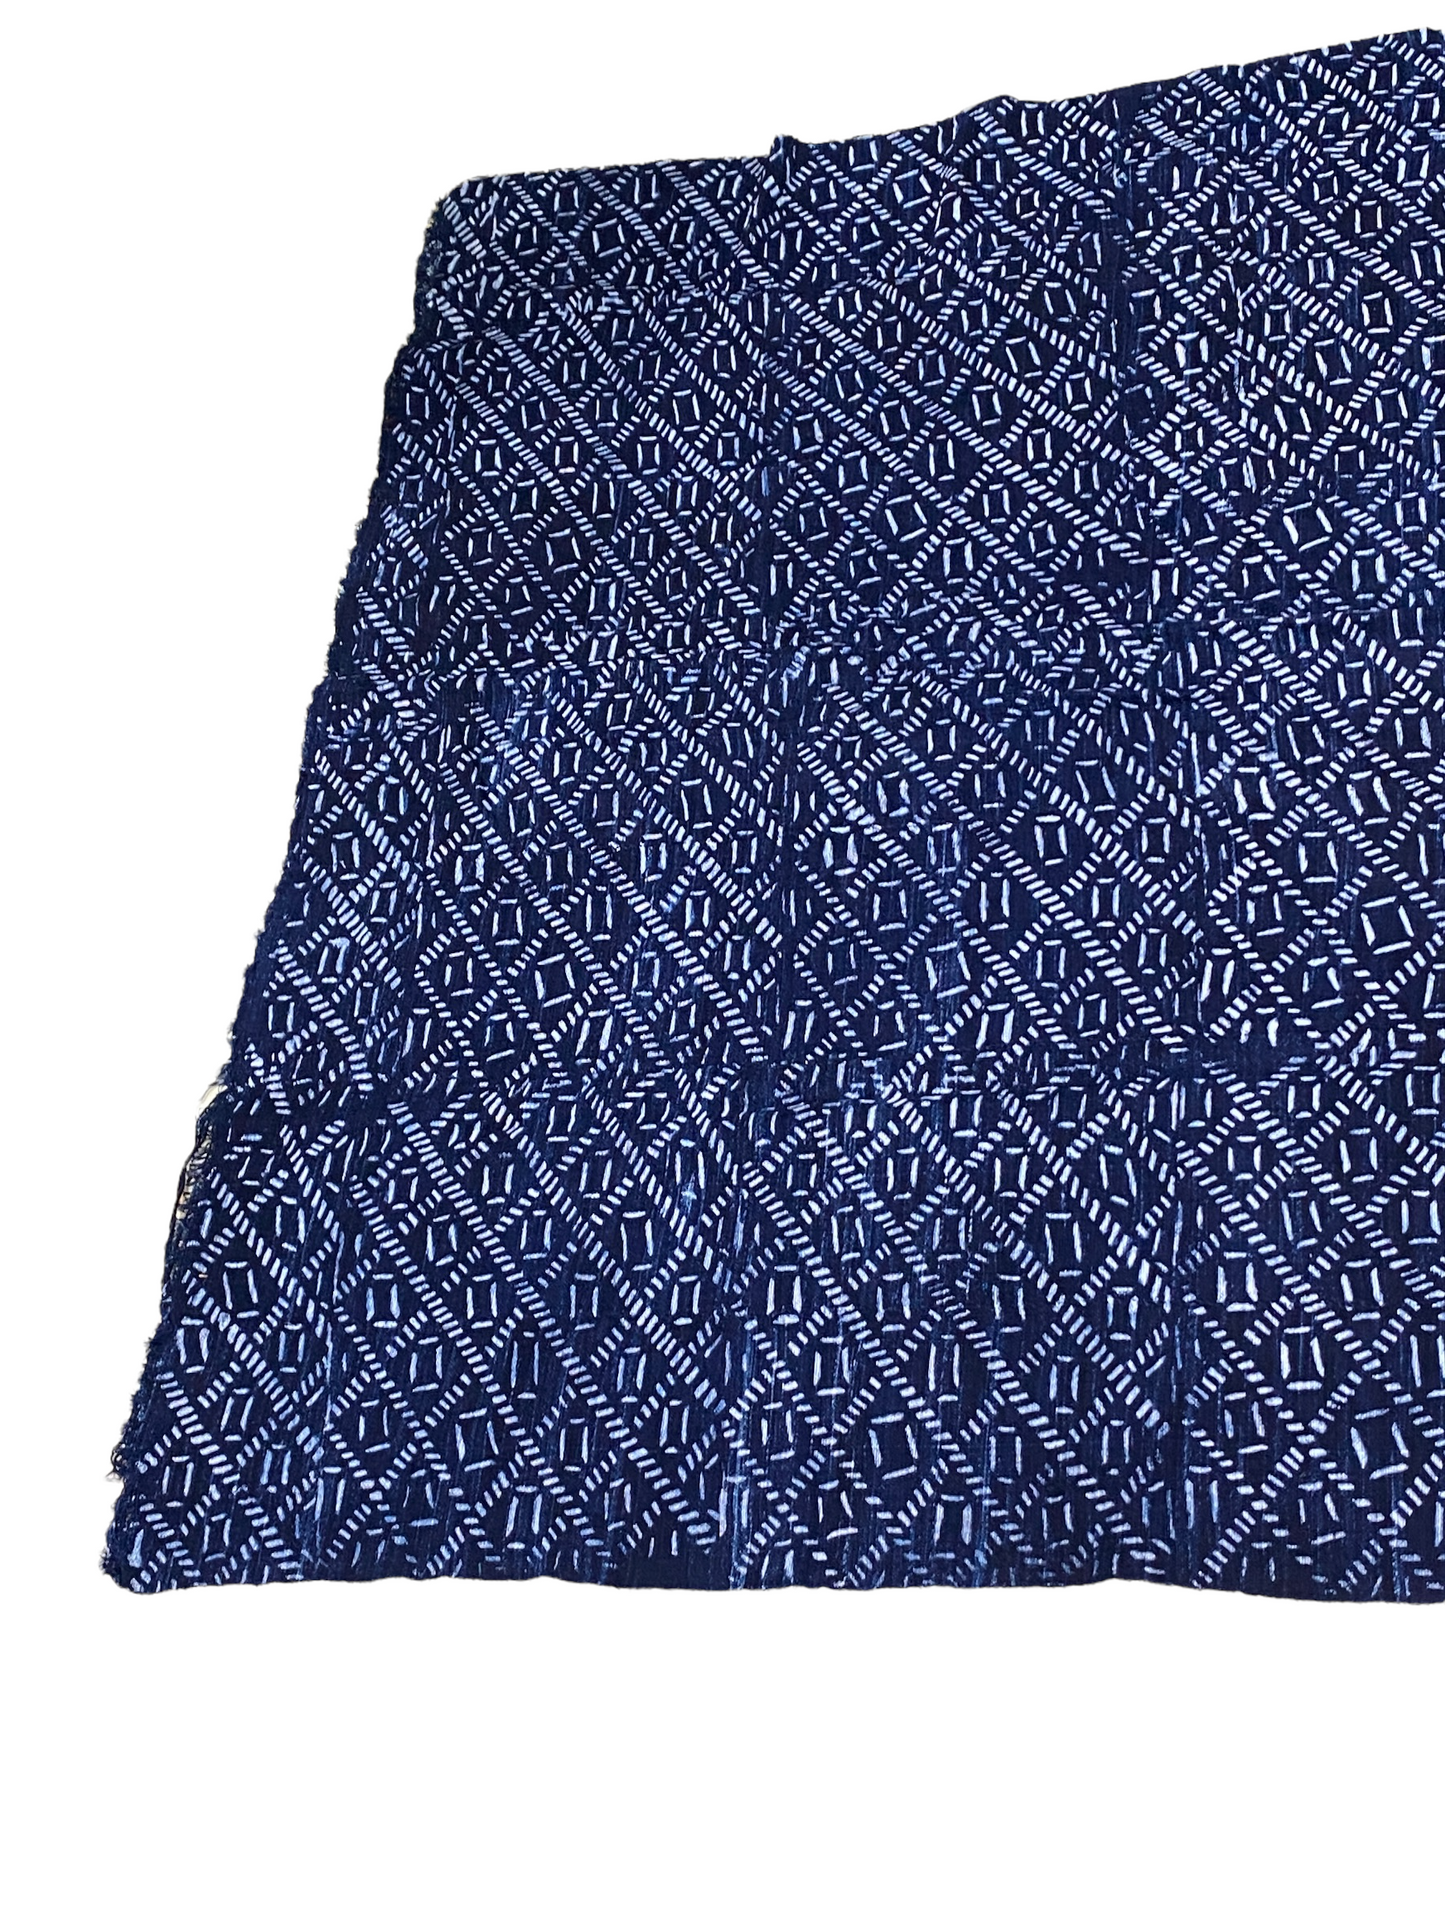 #4738 Fine Weaving Dogon Mali Indigo Mud Cloth Textile